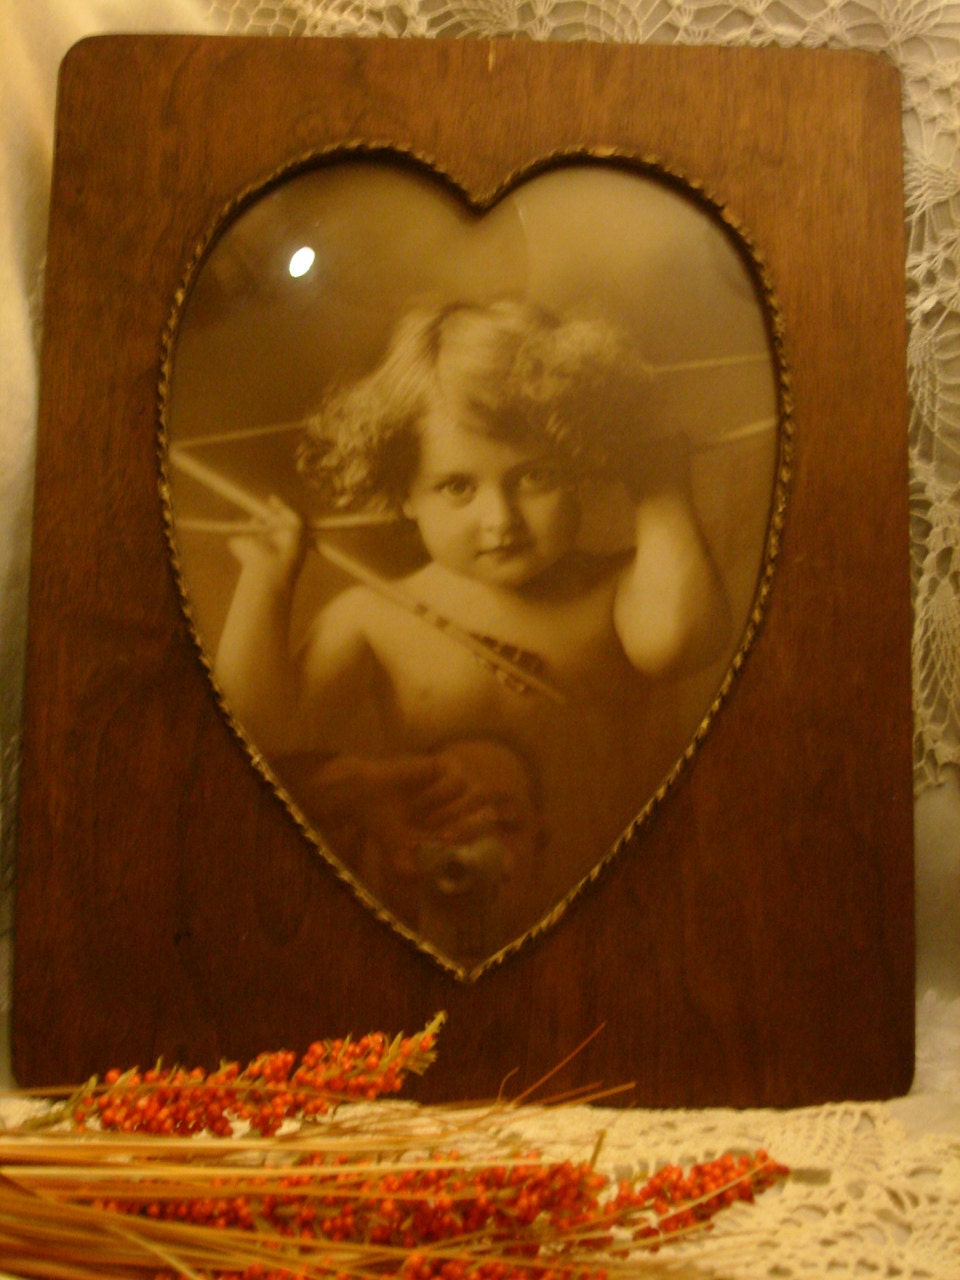 Photos, vintage prints Prints, Nostalgic Cupids cupid Country Decor, Antique Era,  Home